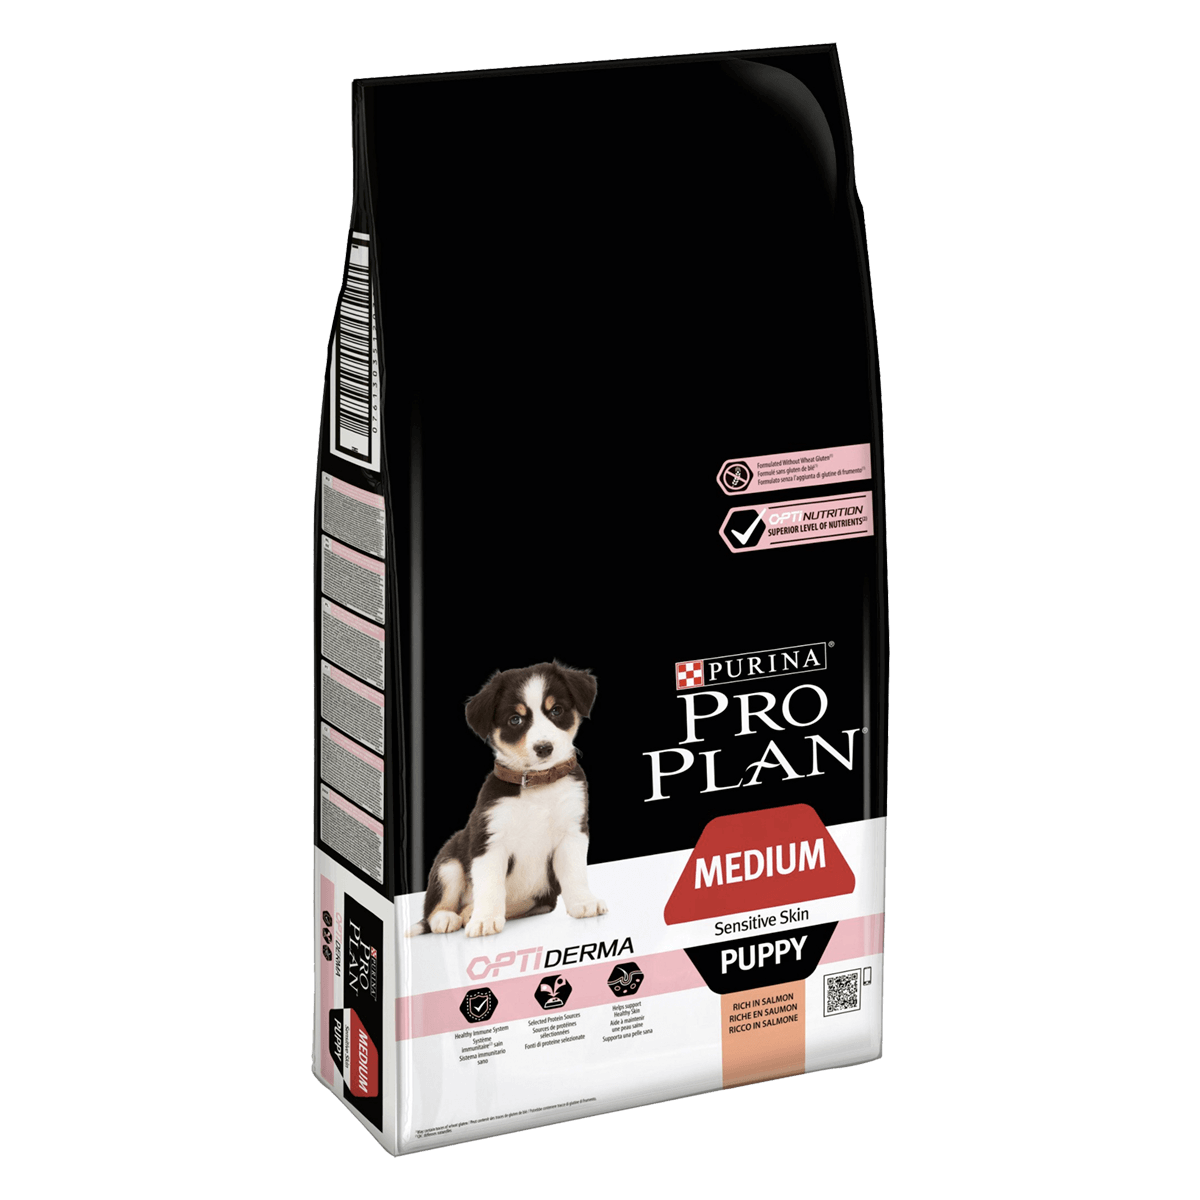 Purina Pro Plan Puppy Medium Sensitive Skin OptiDerma 20 кг - корм Пурина для щенков средних пород